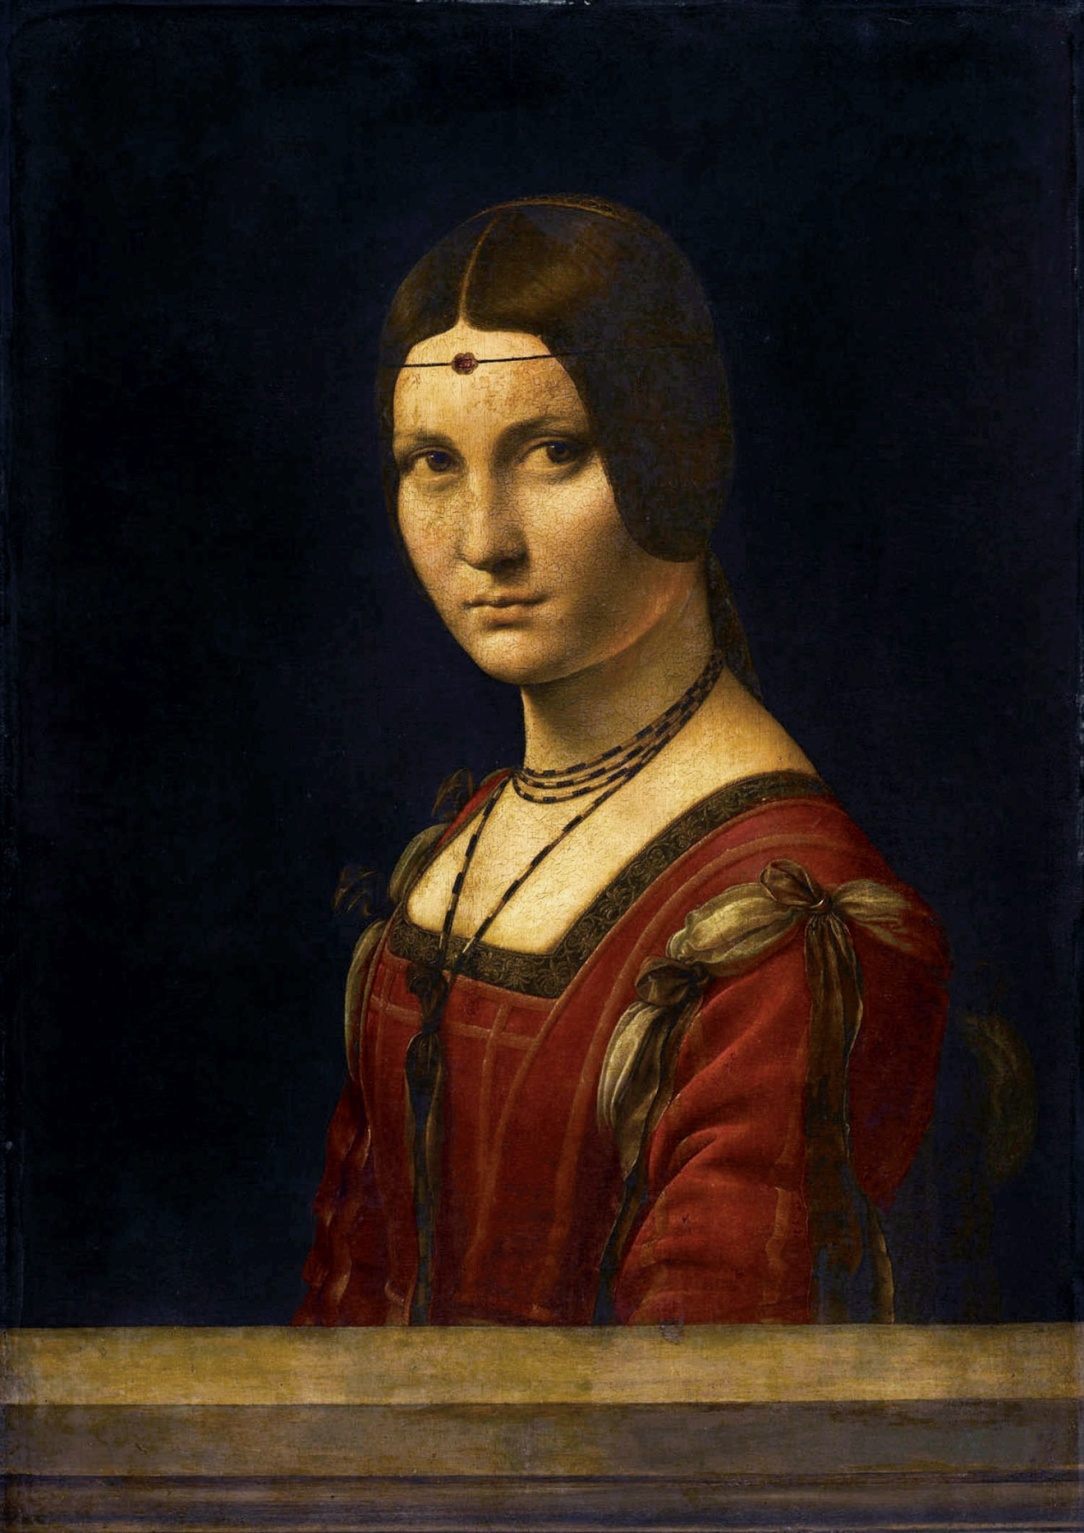 https://upload.wikimedia.org/wikipedia/commons/c/c3/Leonardo_da_Vinci_(attrib)-_la_Belle_Ferroniere.jpg